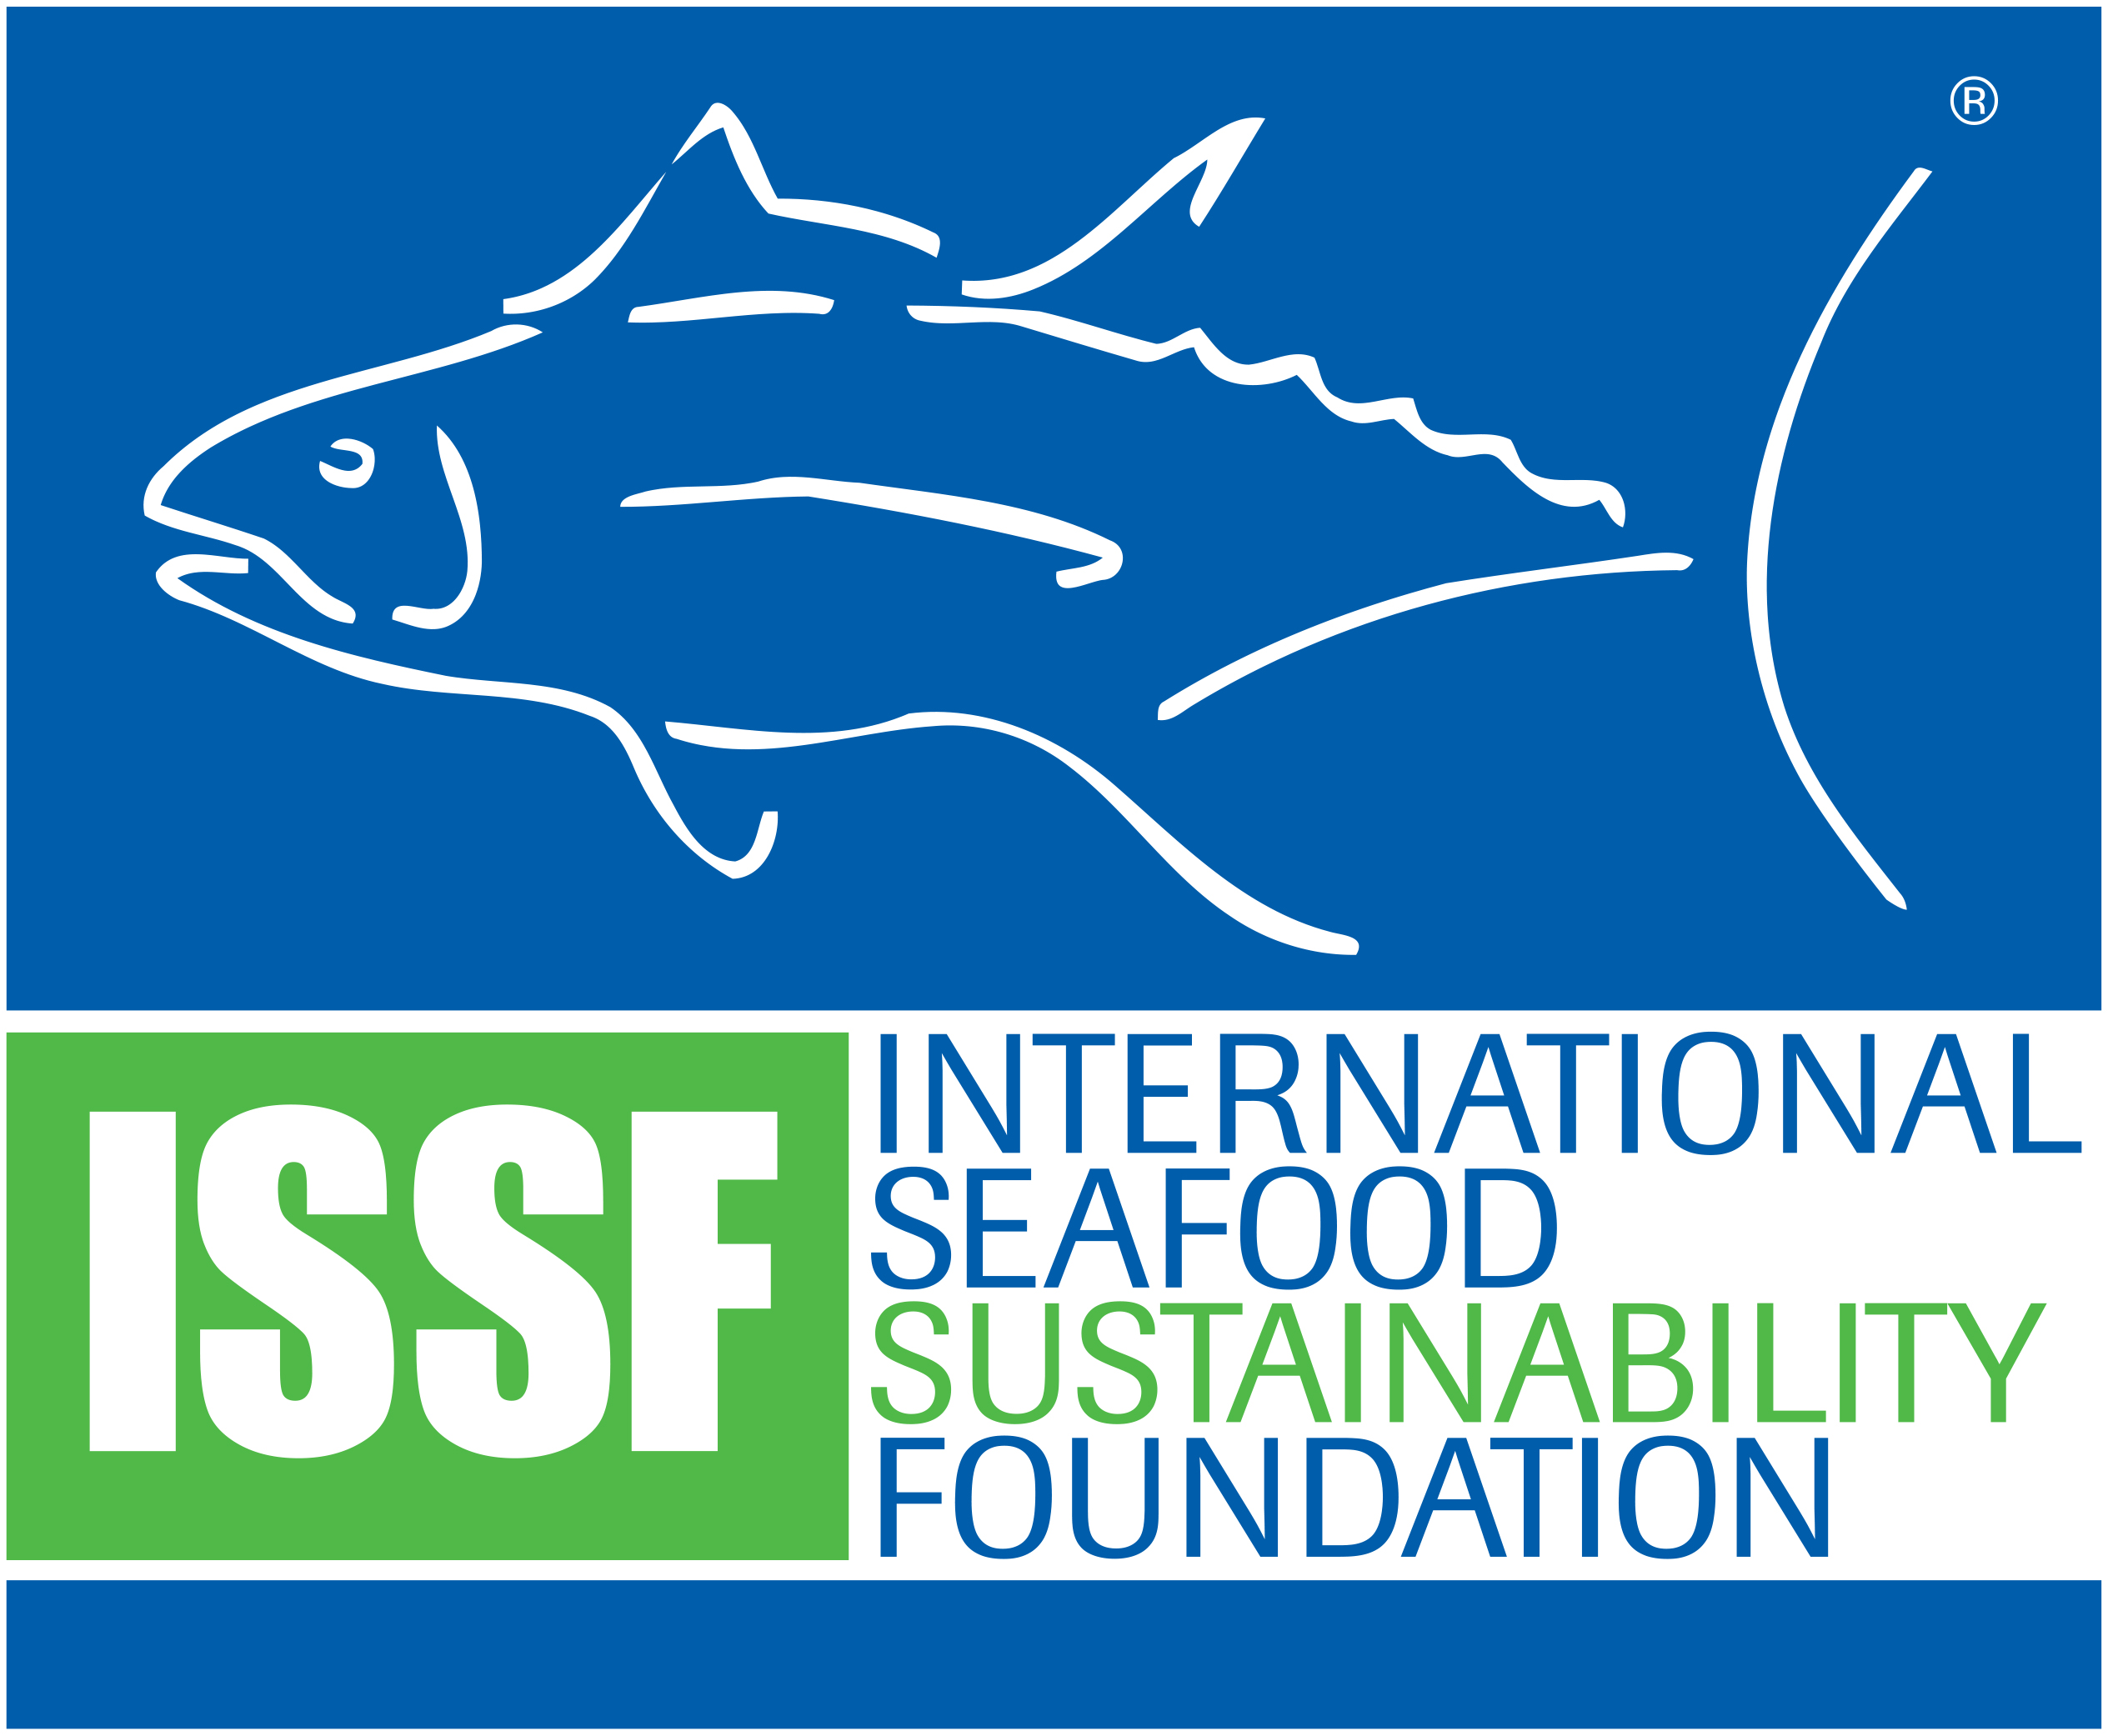 International Seafood Sustainability Foundation